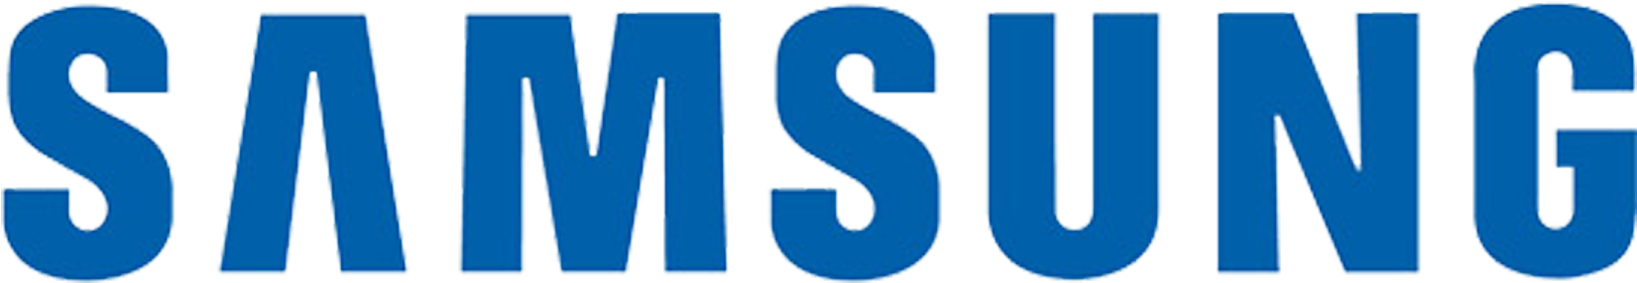 Enterprise Logo Transparent Image Gallery - Samsung Logo (1706x1124)